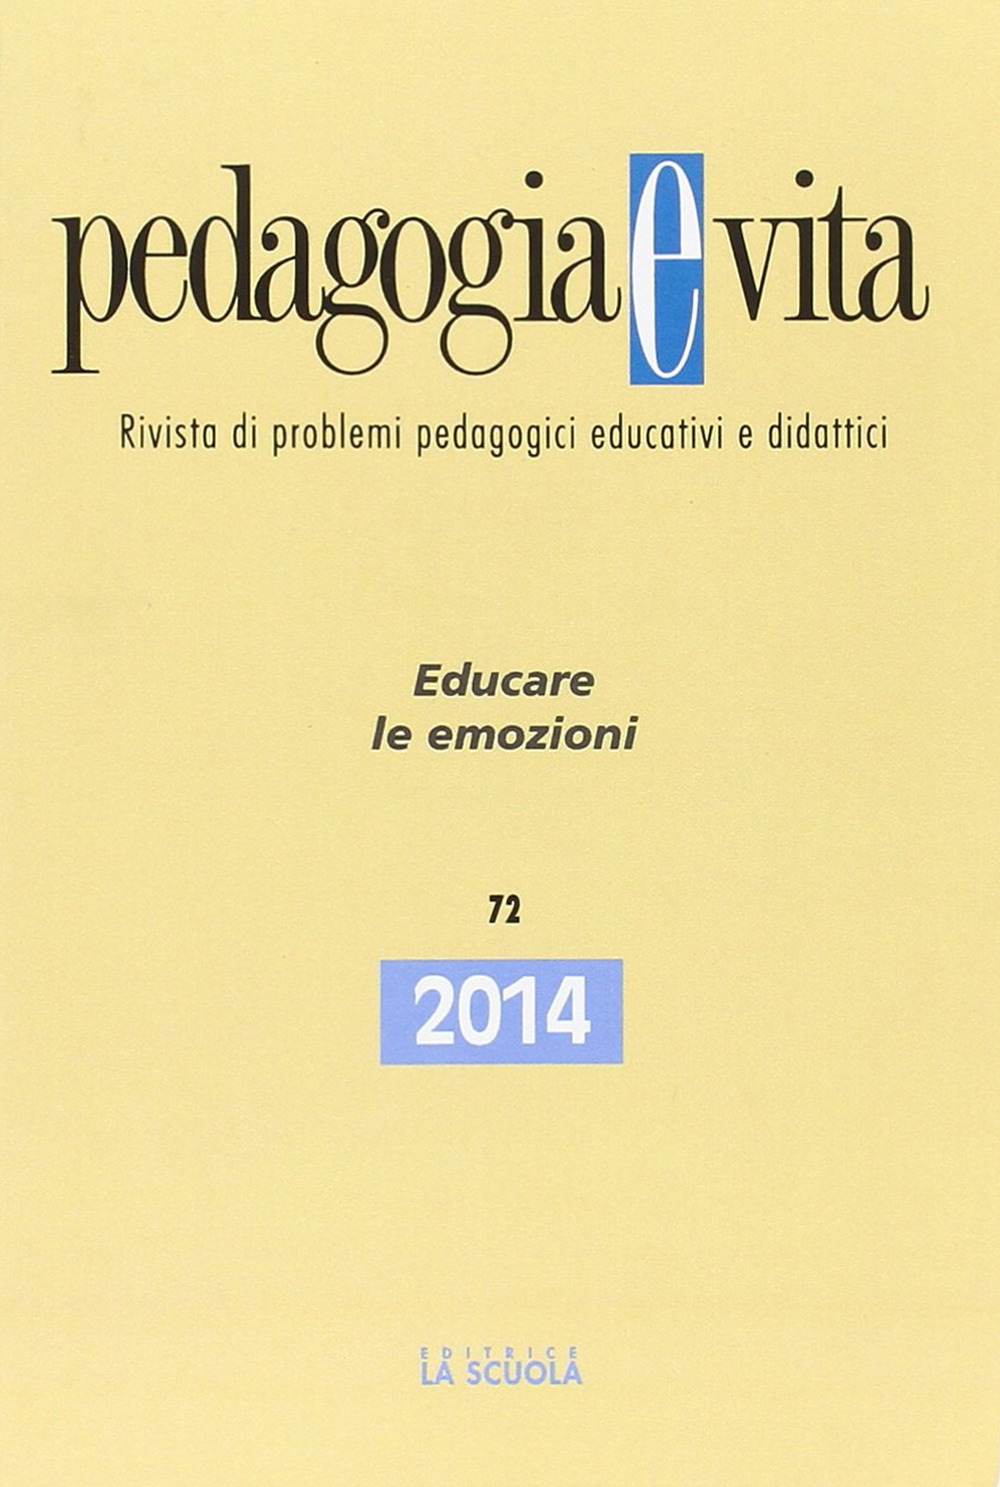 Image of Pedagogia e vita. Educare le emozioni